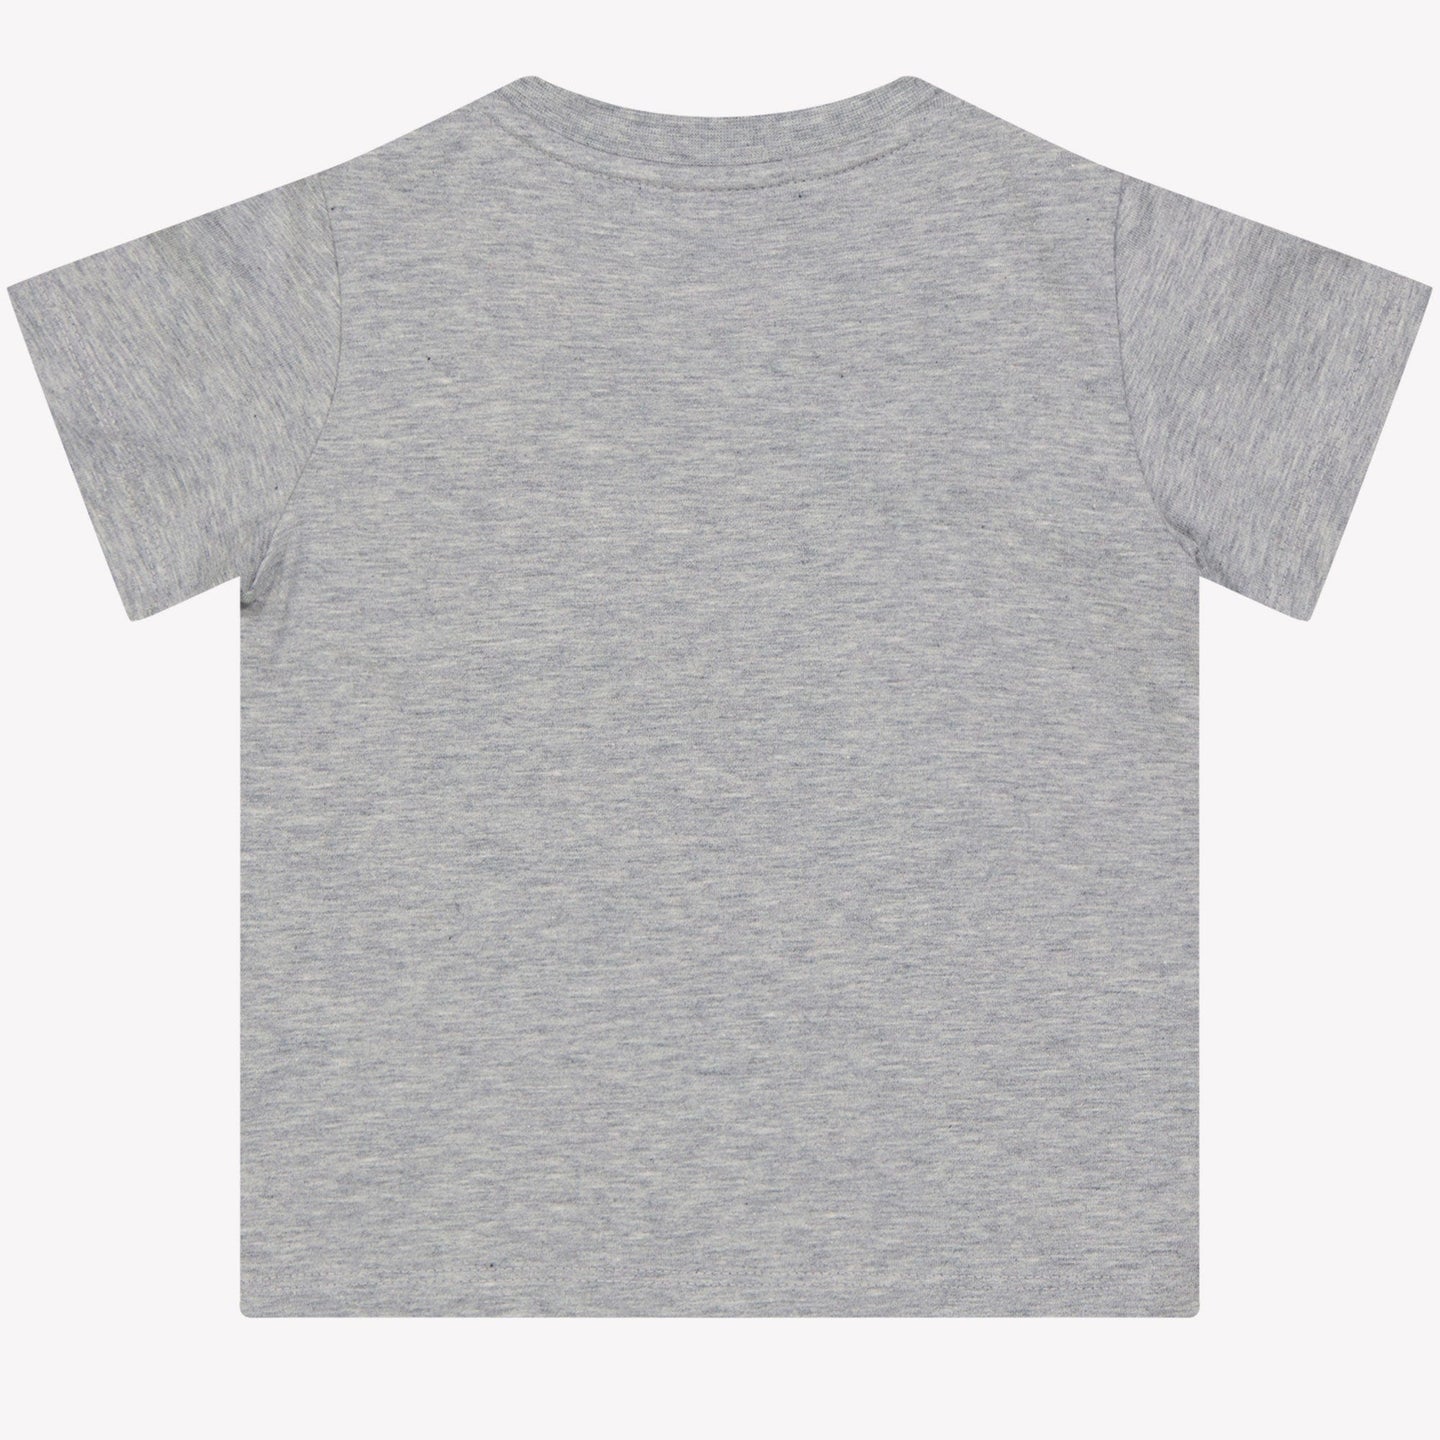 Moncler Baby Unisex T-shirt Grijs 3/6